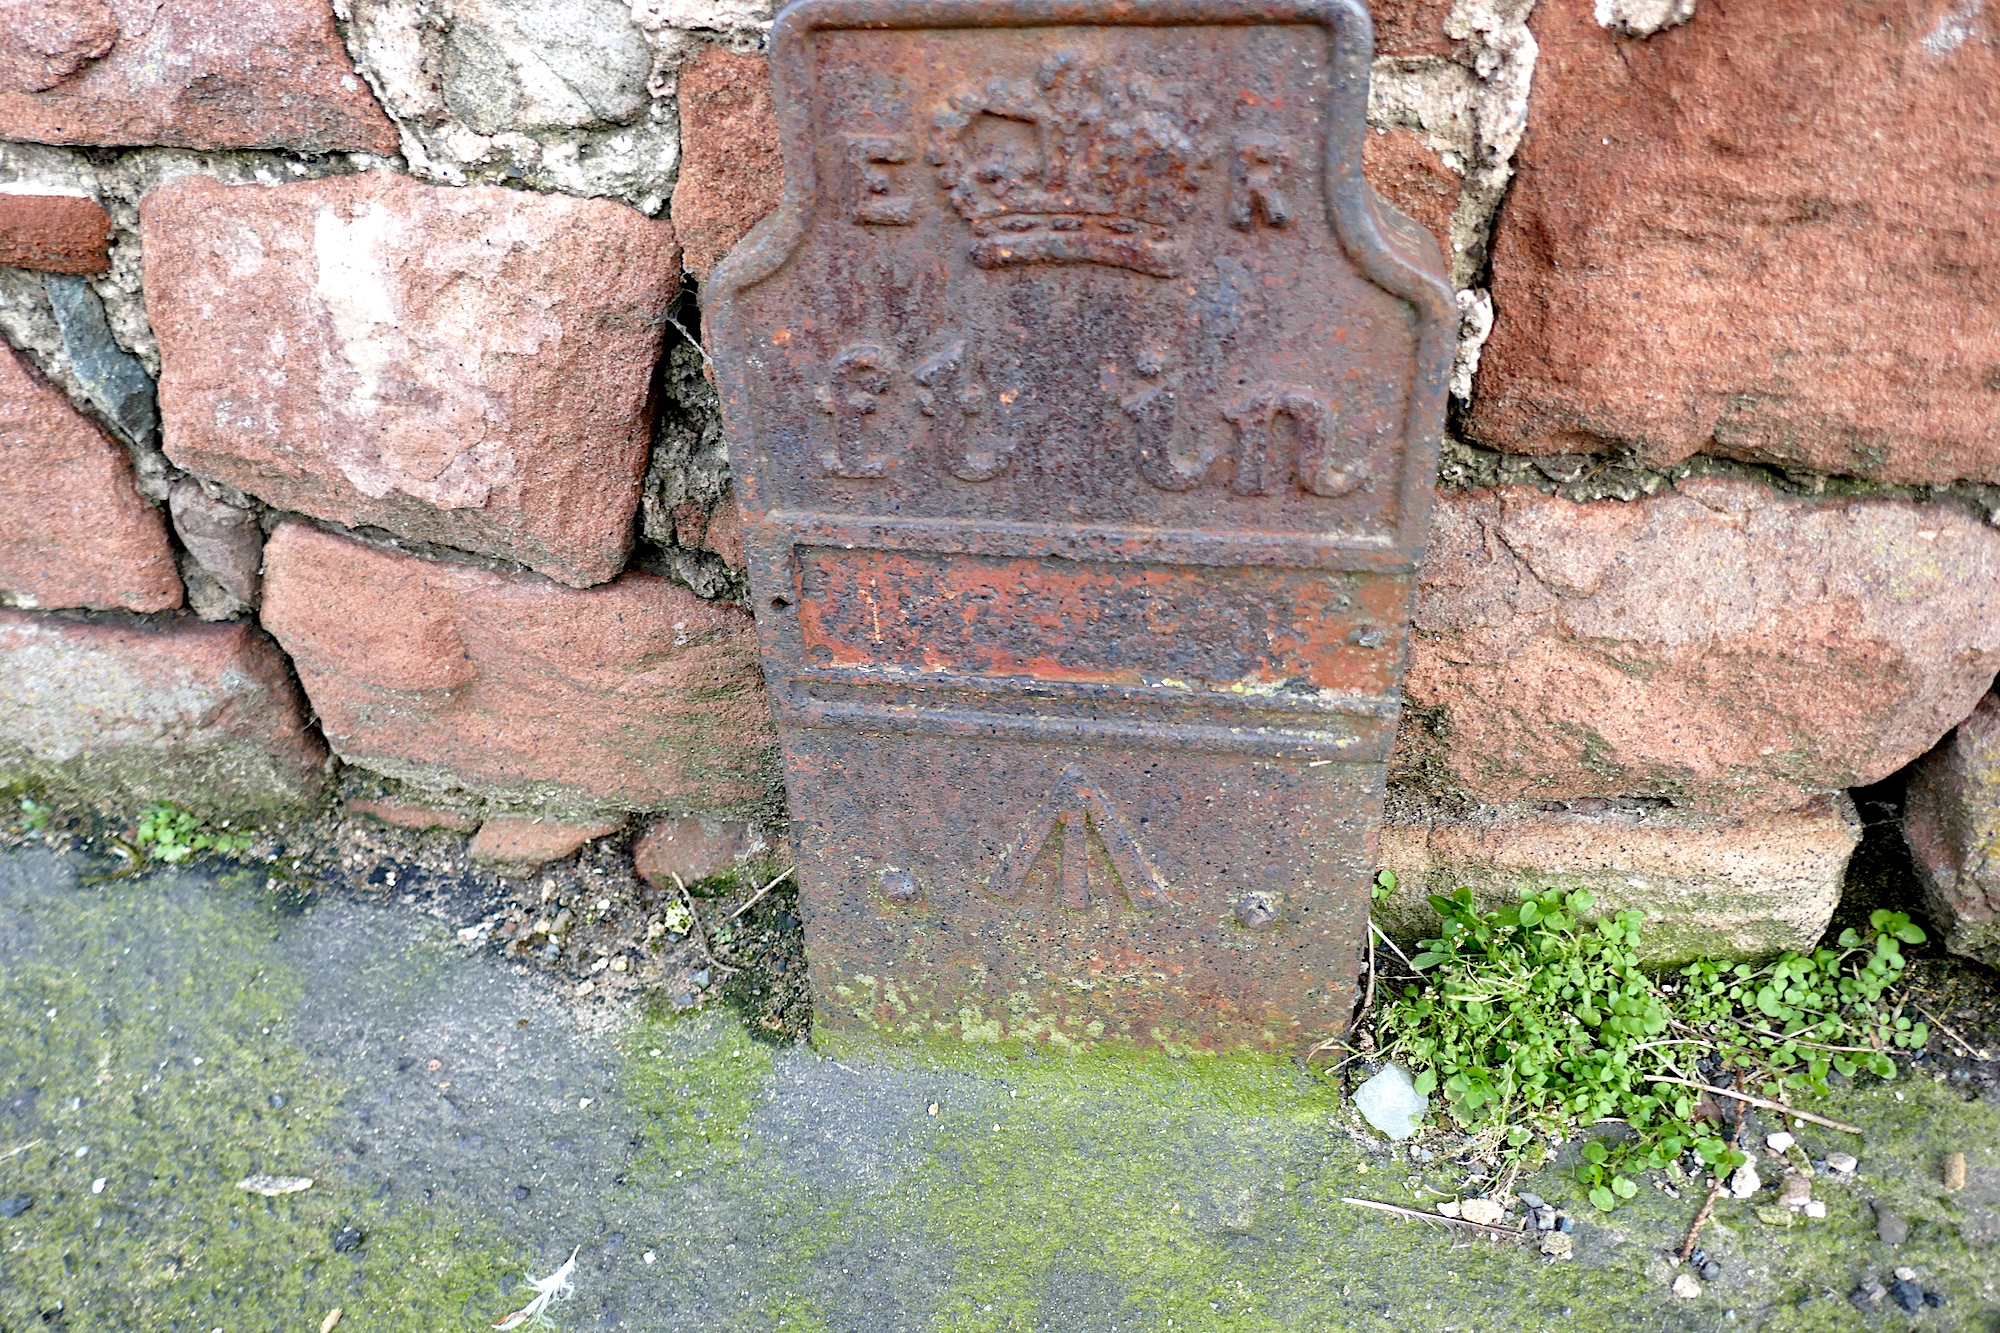 Telegraph cable marker post at Heskett House, High Heskett, Cumbria by IAmAnita 